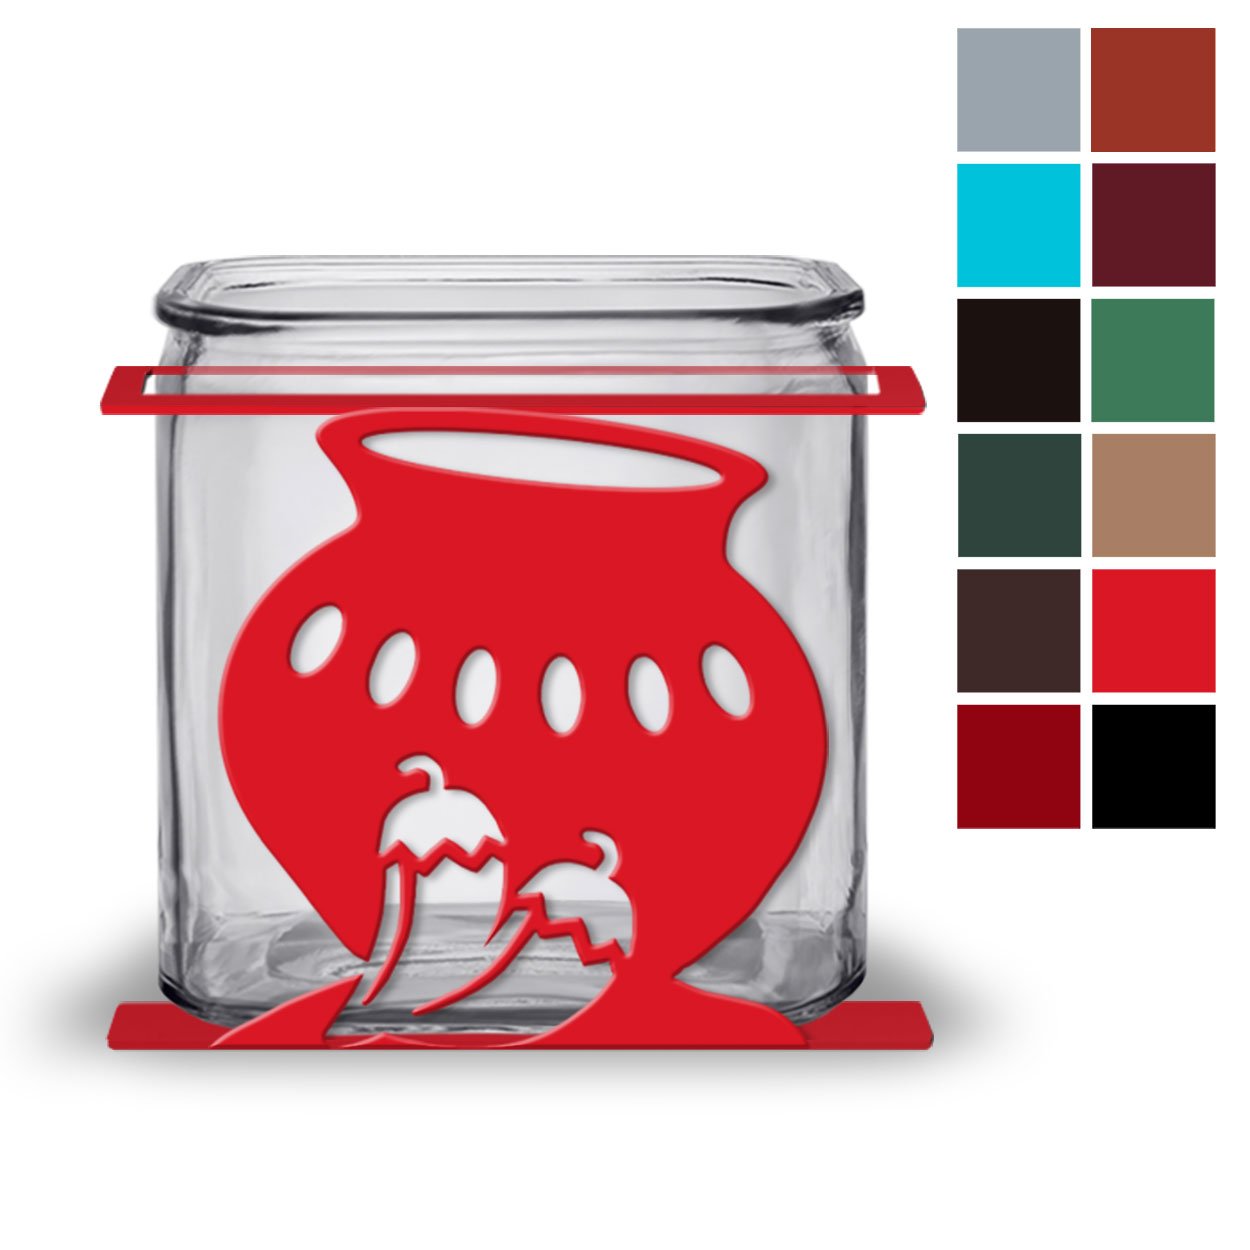 621282 - Chili Pot Design Kitchen Utensil Holder - Choose Color